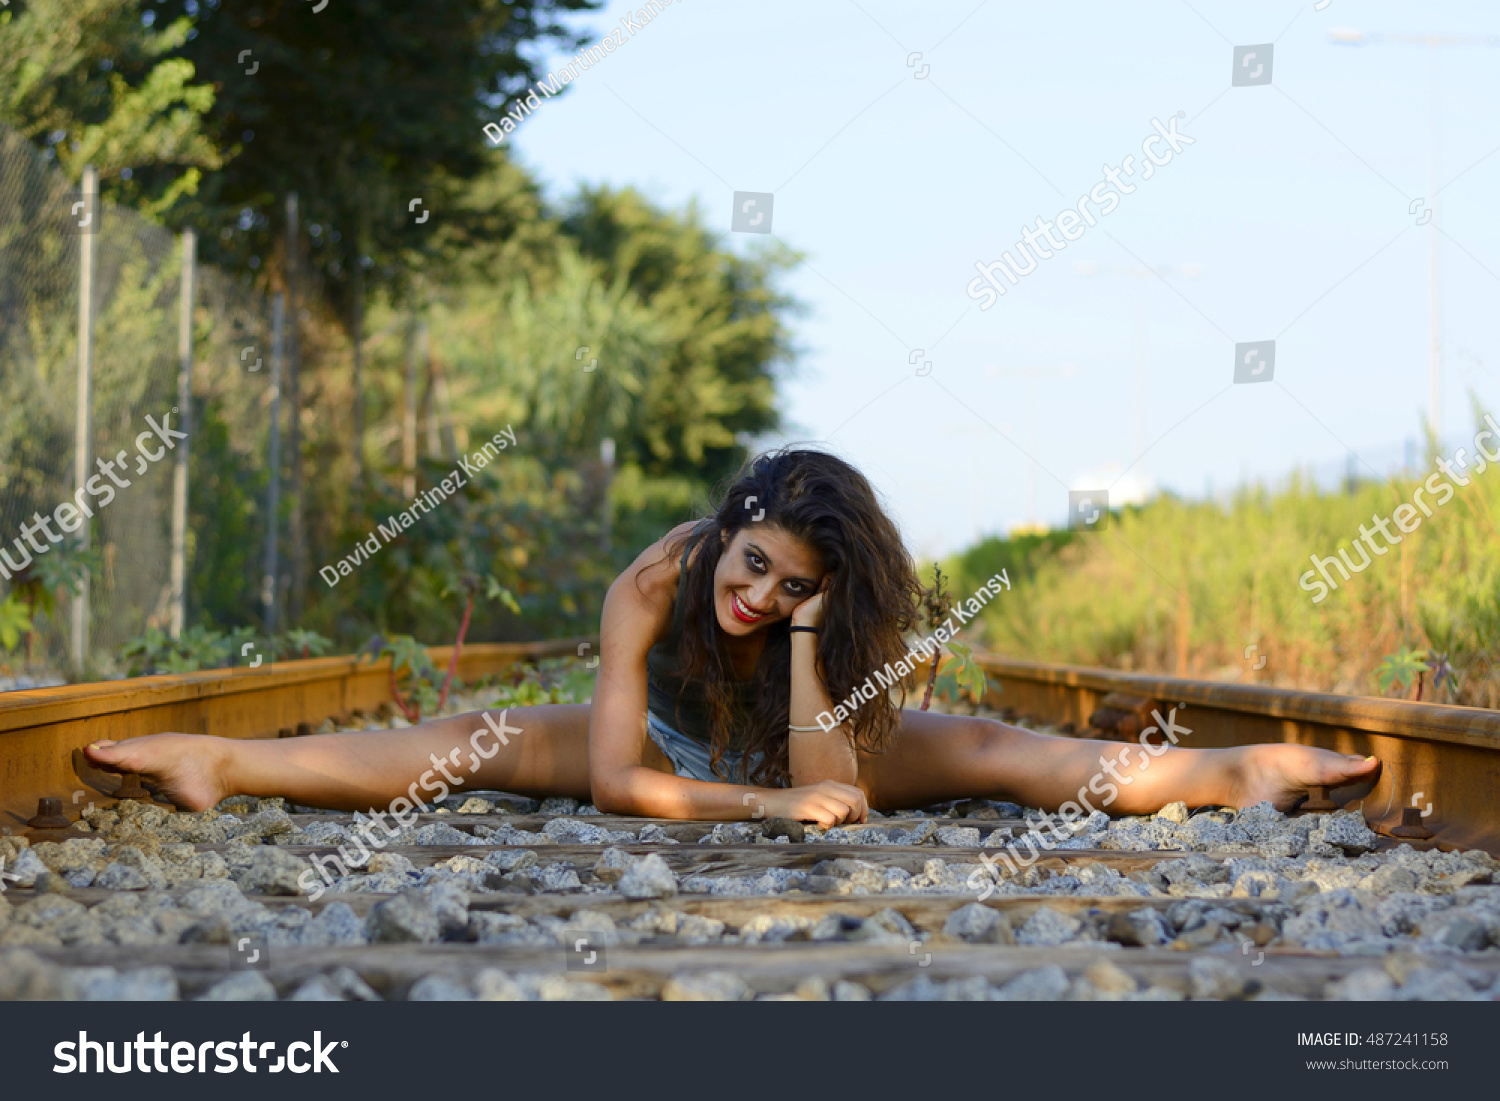 https://image.shutterstock.com/z/stock-photo-girl-sitting-with-her-legs-spread-on-train-tracks-487241158.jpg